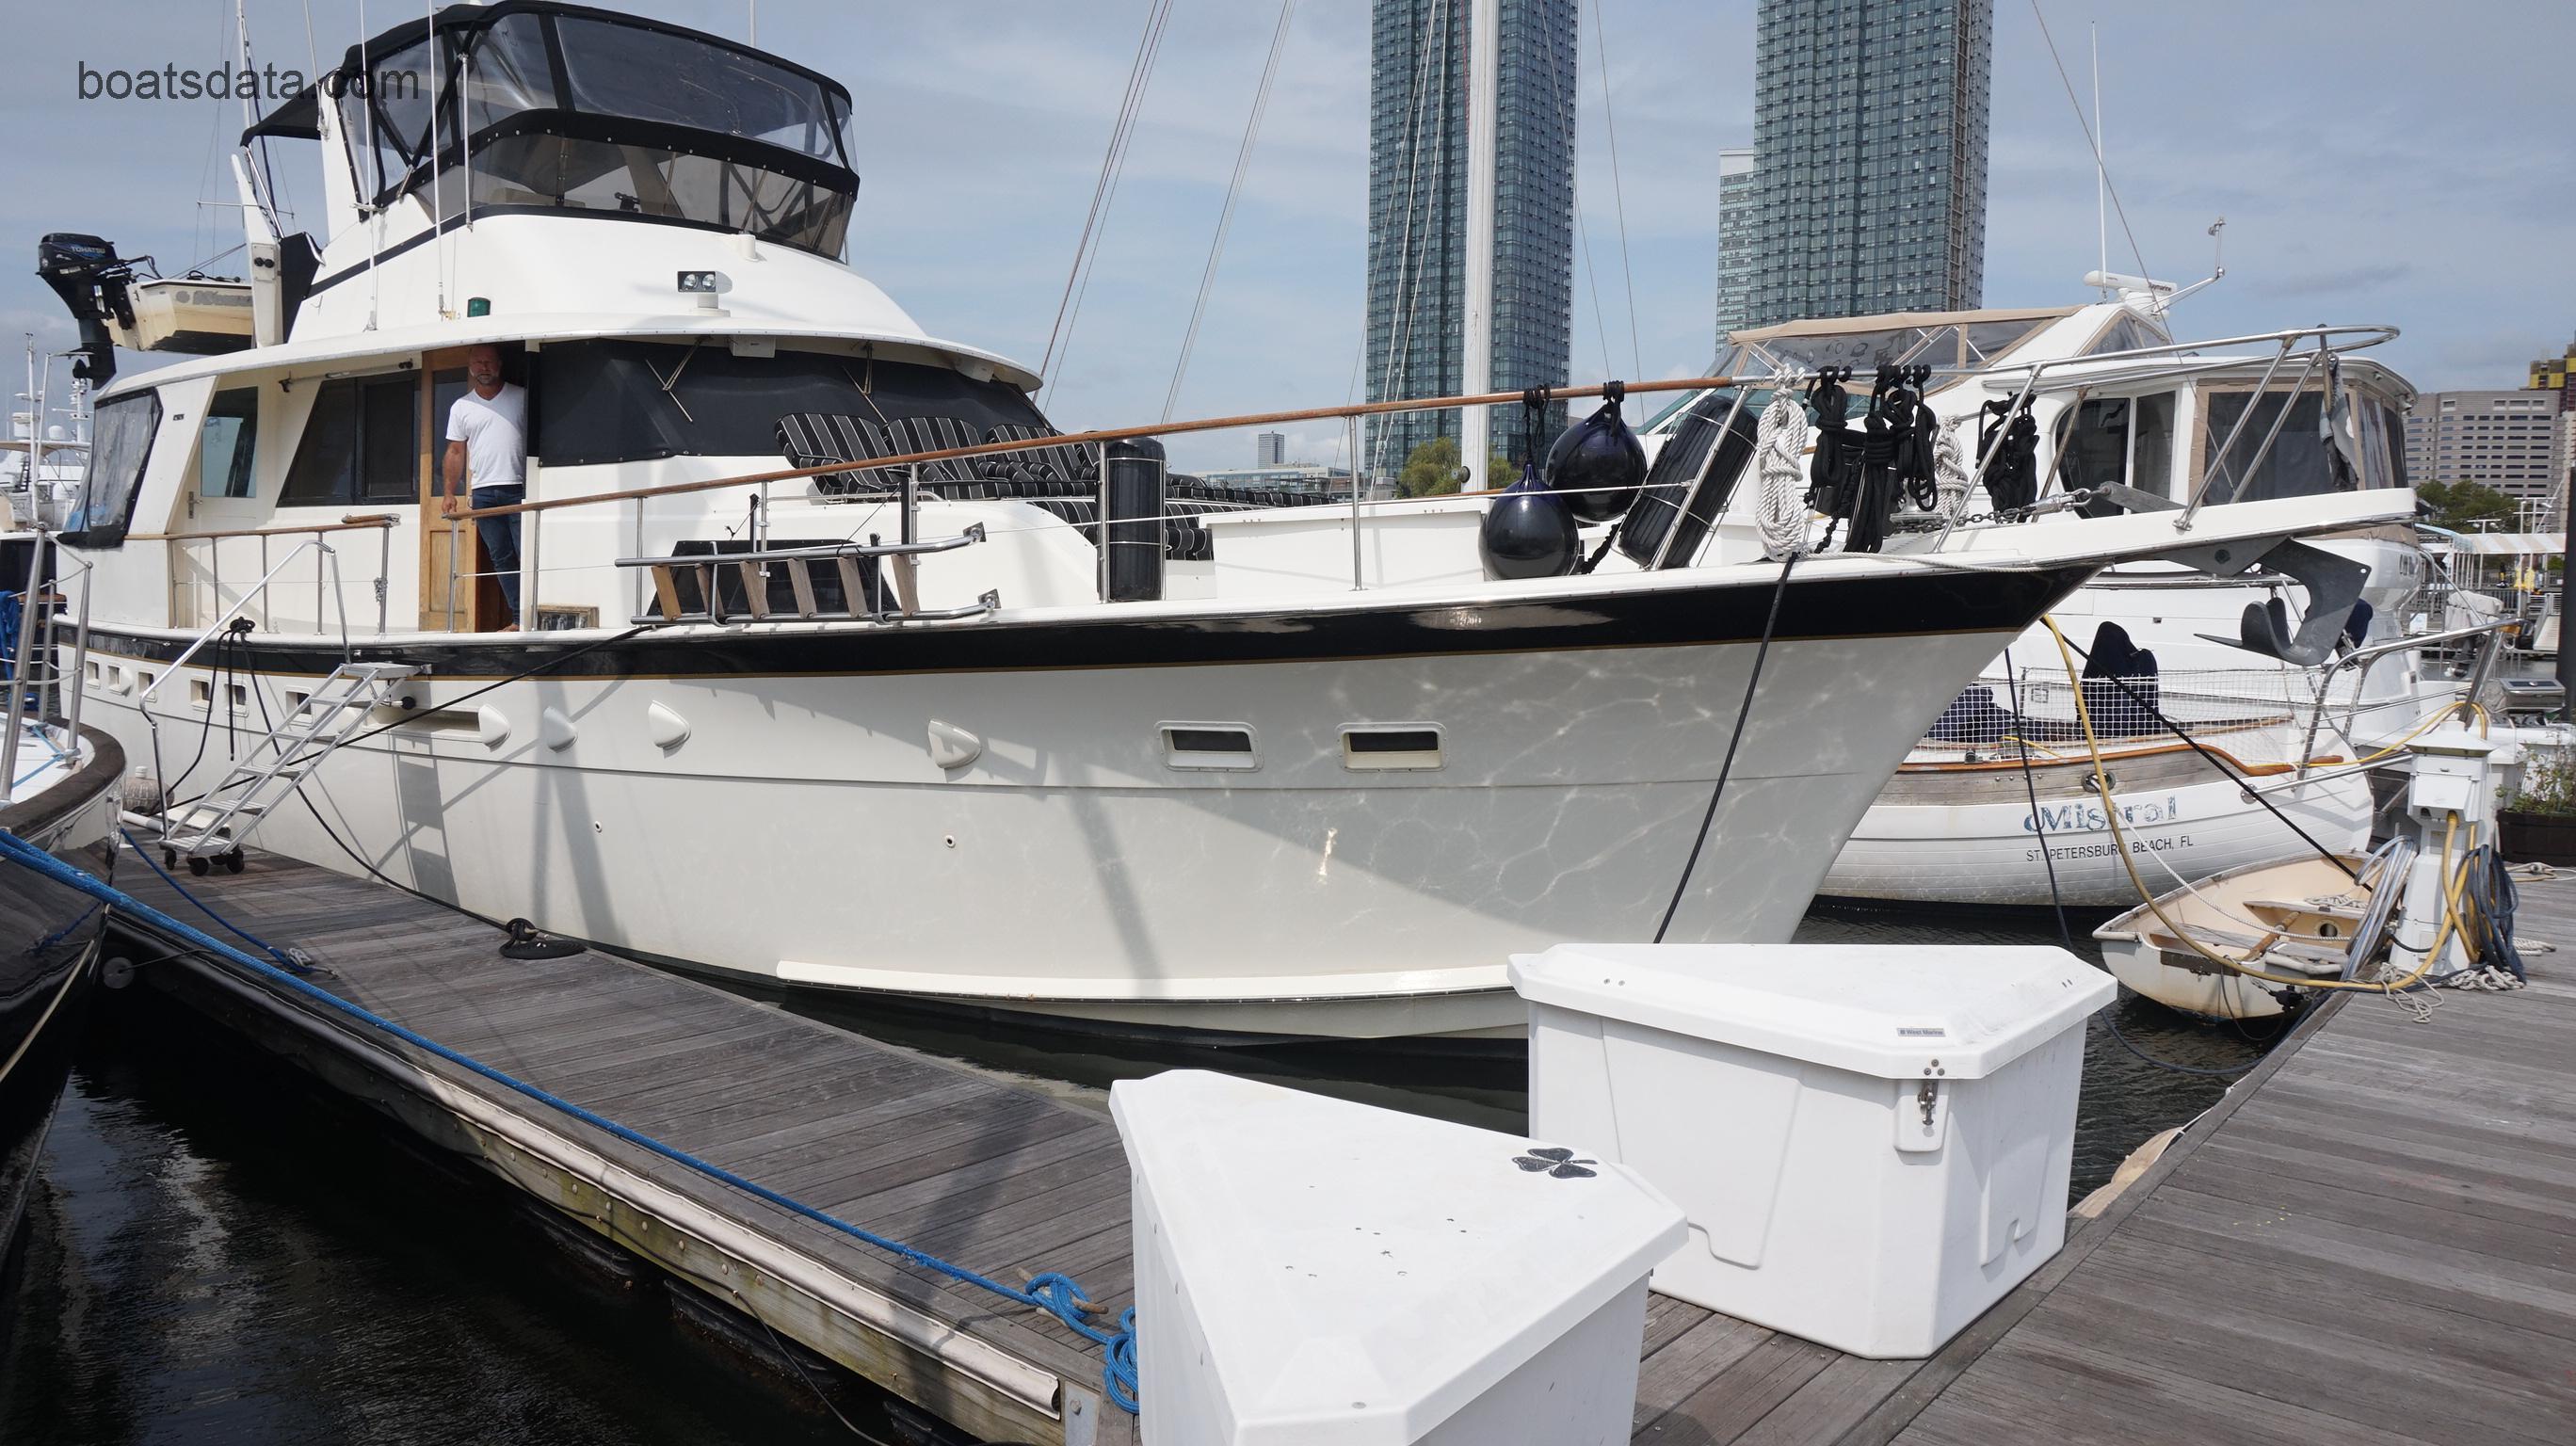 Hatteras Stabilized Motor Yacht Technical Data 